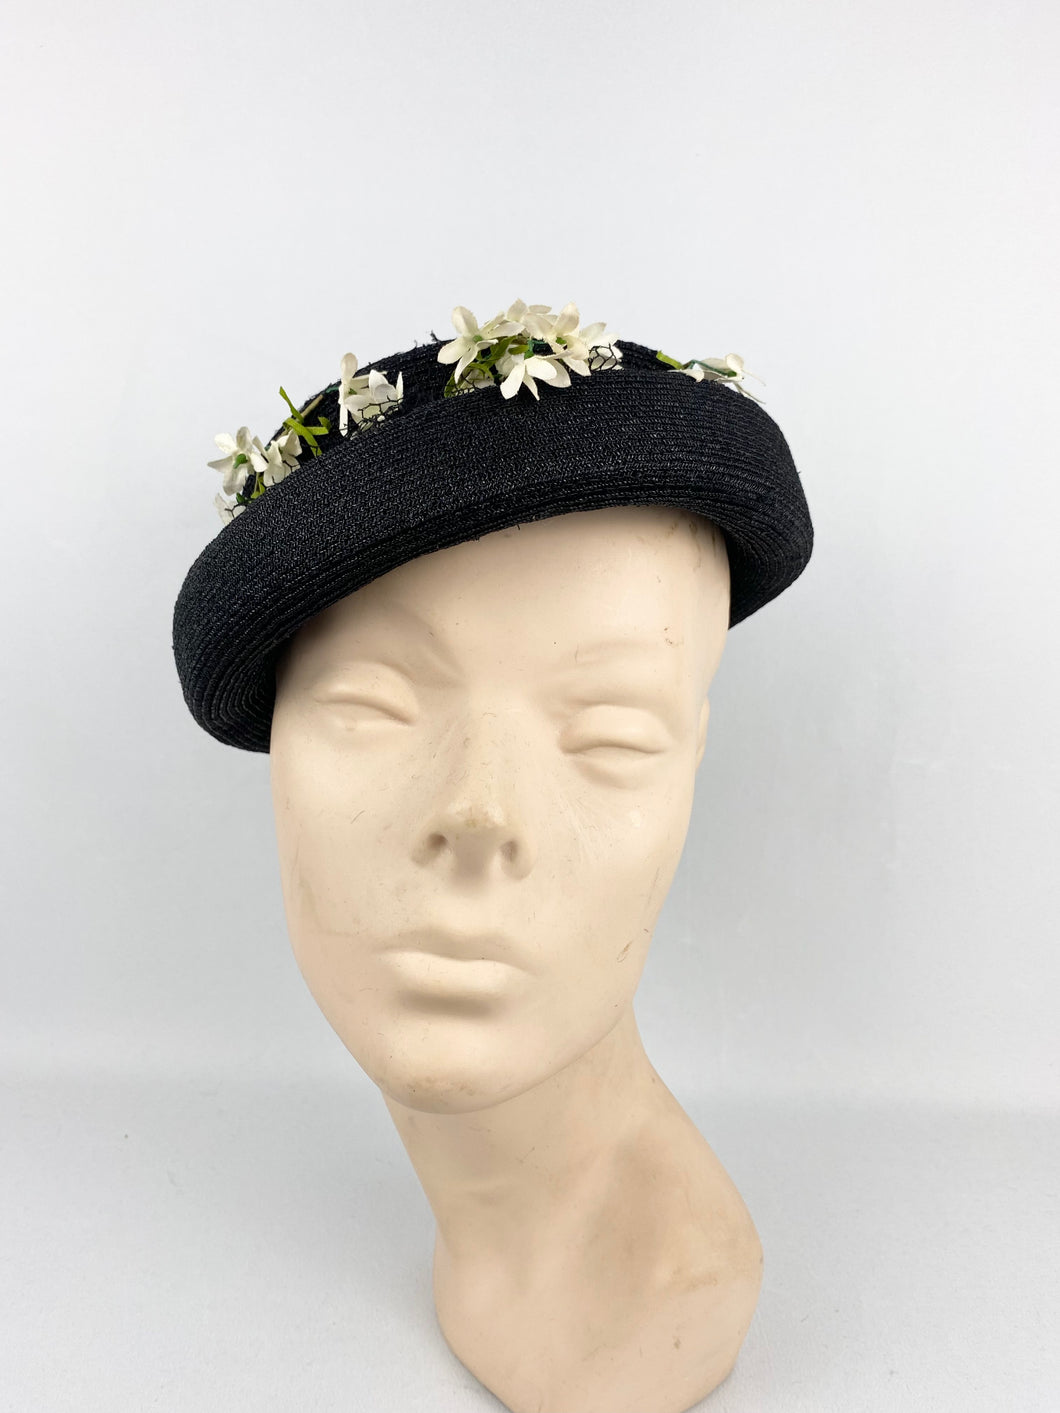 Original 1950s Black Straw Hat with White Floral Trim